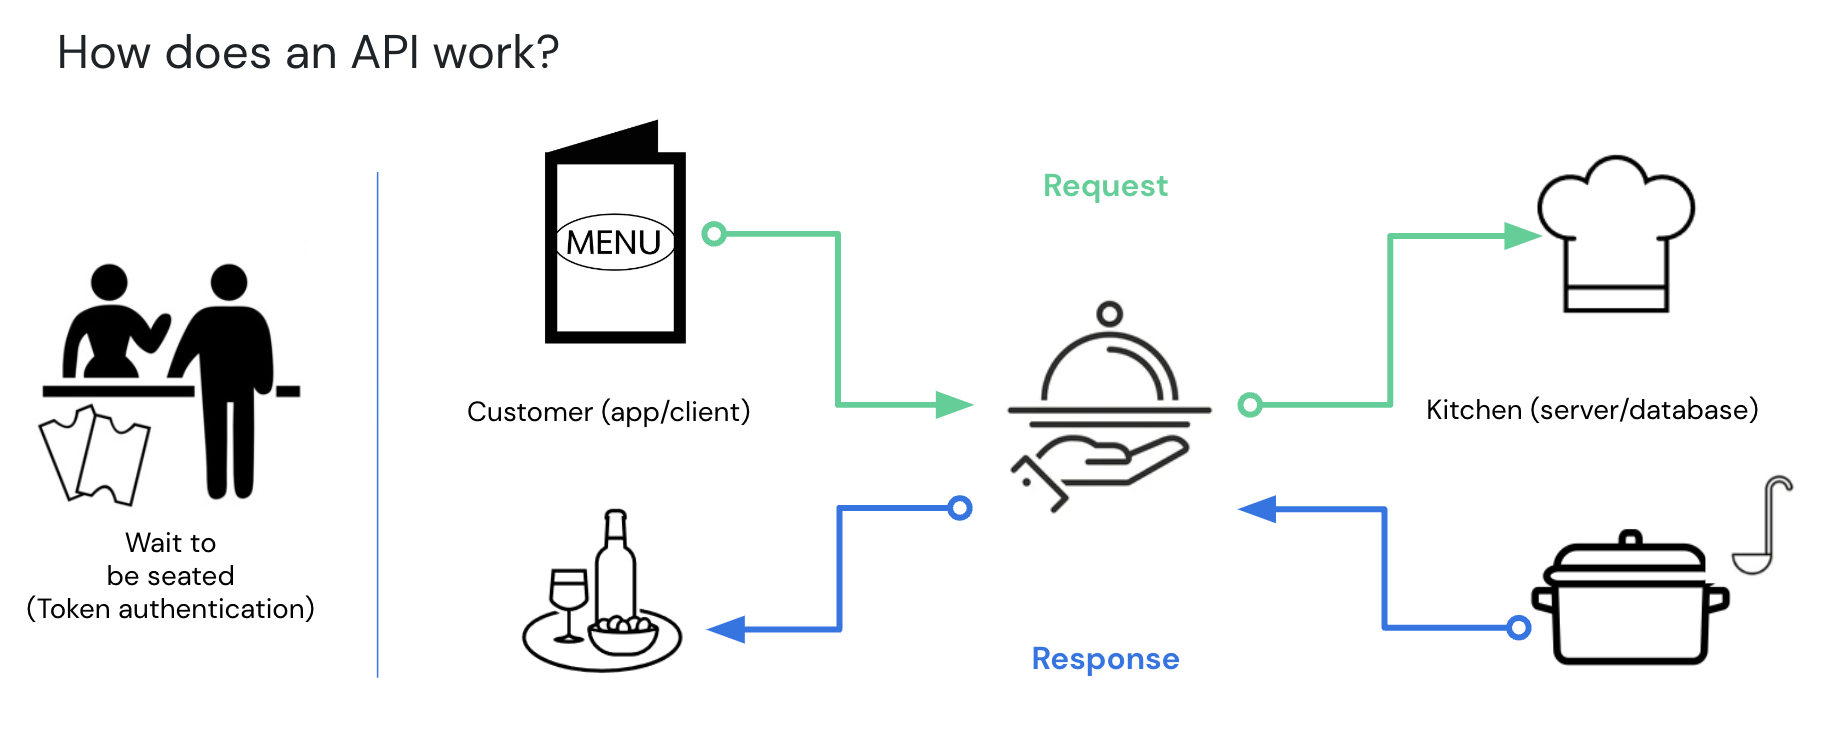 How an API works - restaurant metaphor